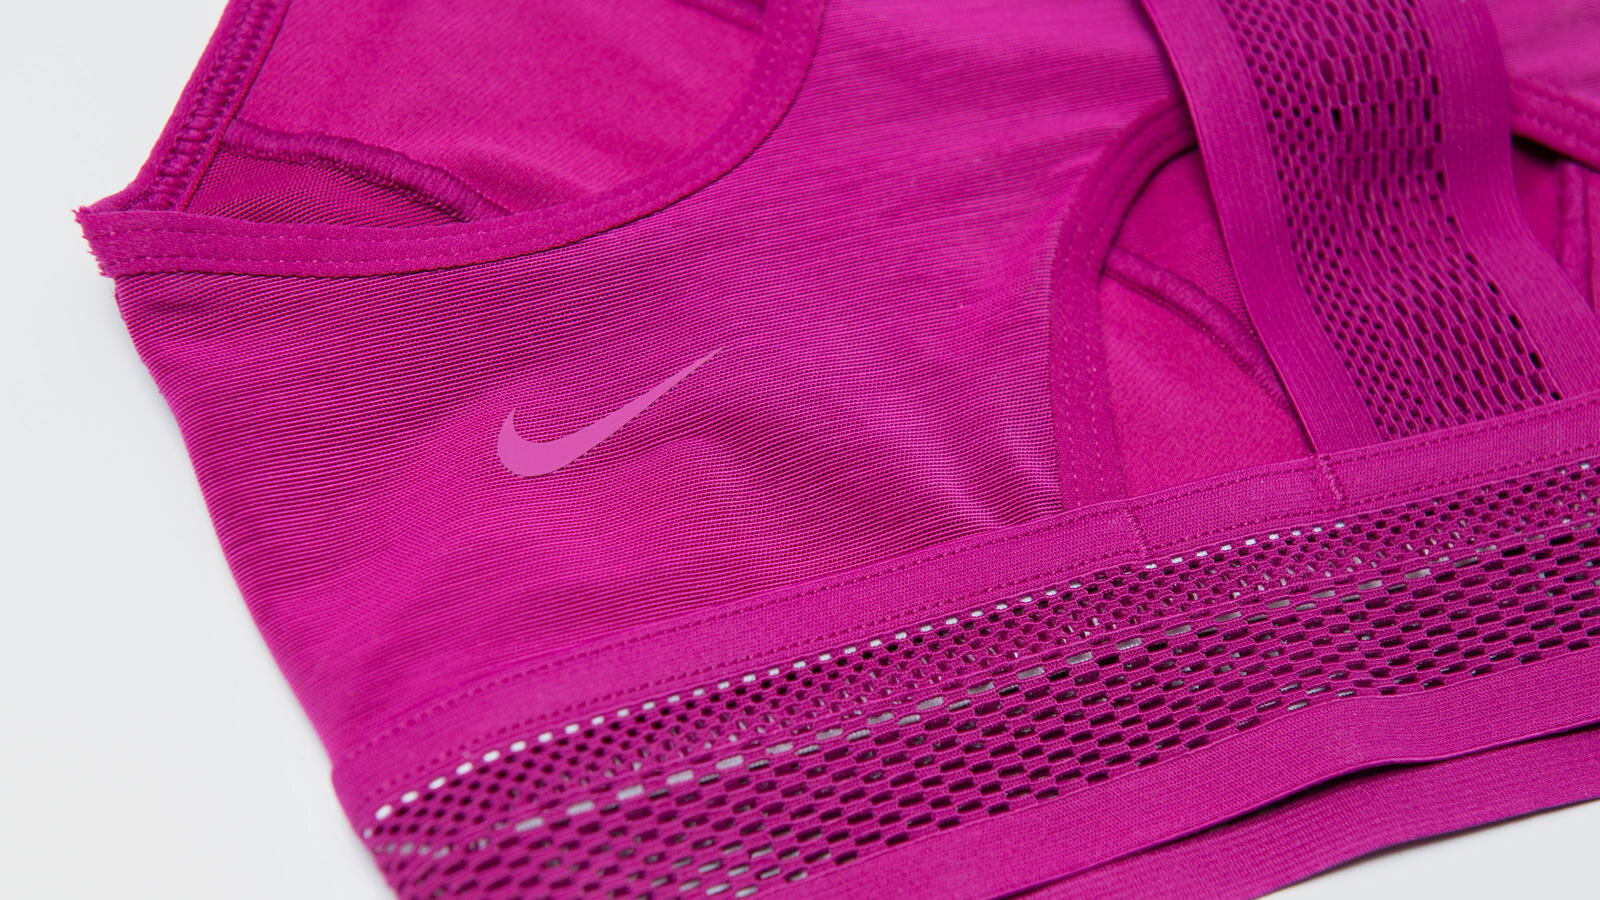 Nike Women's Debut New Bra Innovations: The Ultrabreathe Sports